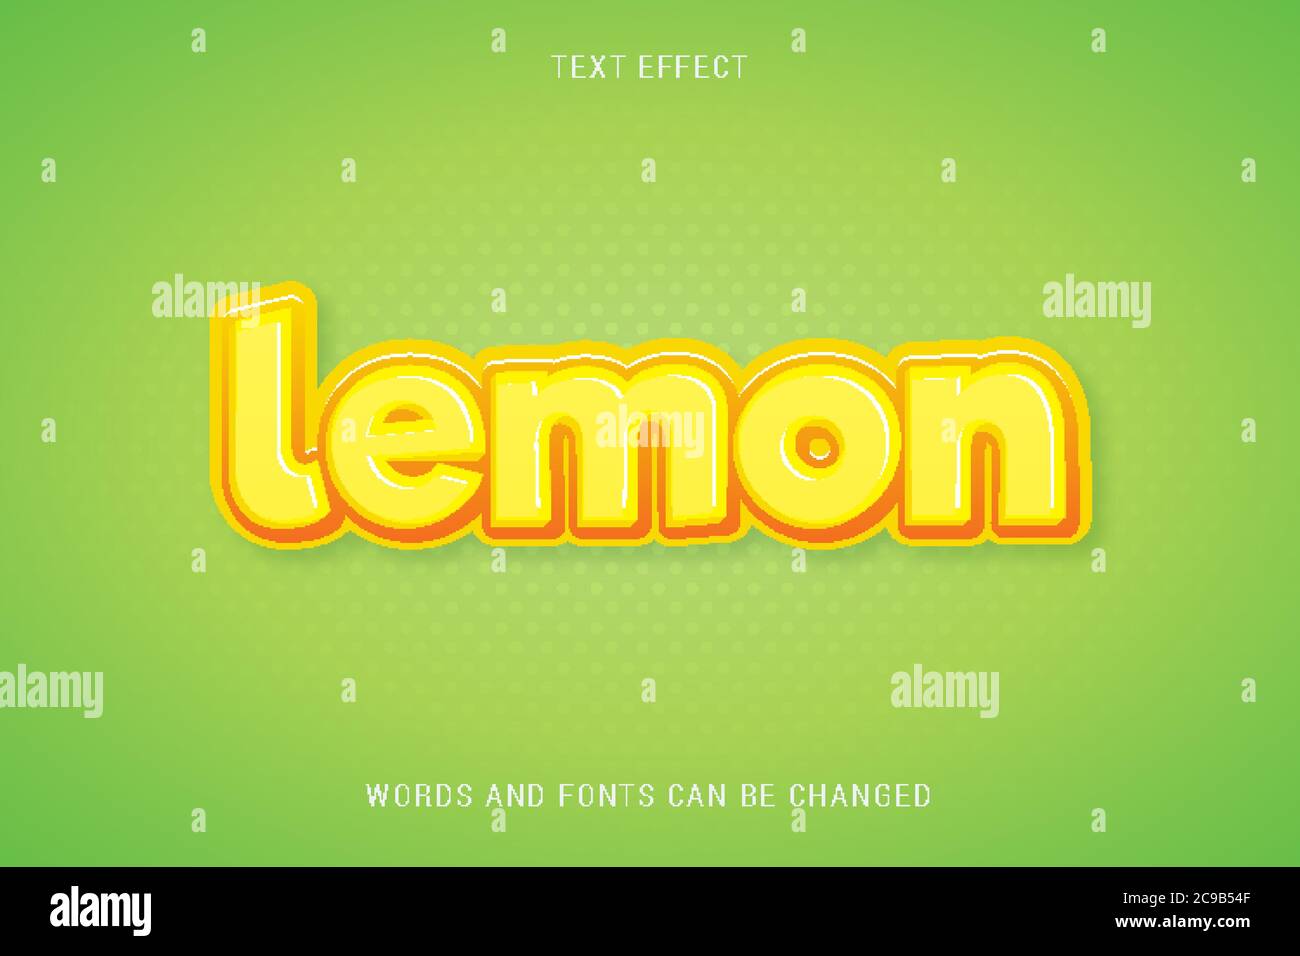 fresh lemon text effect 100% editable vector image Stock Vector